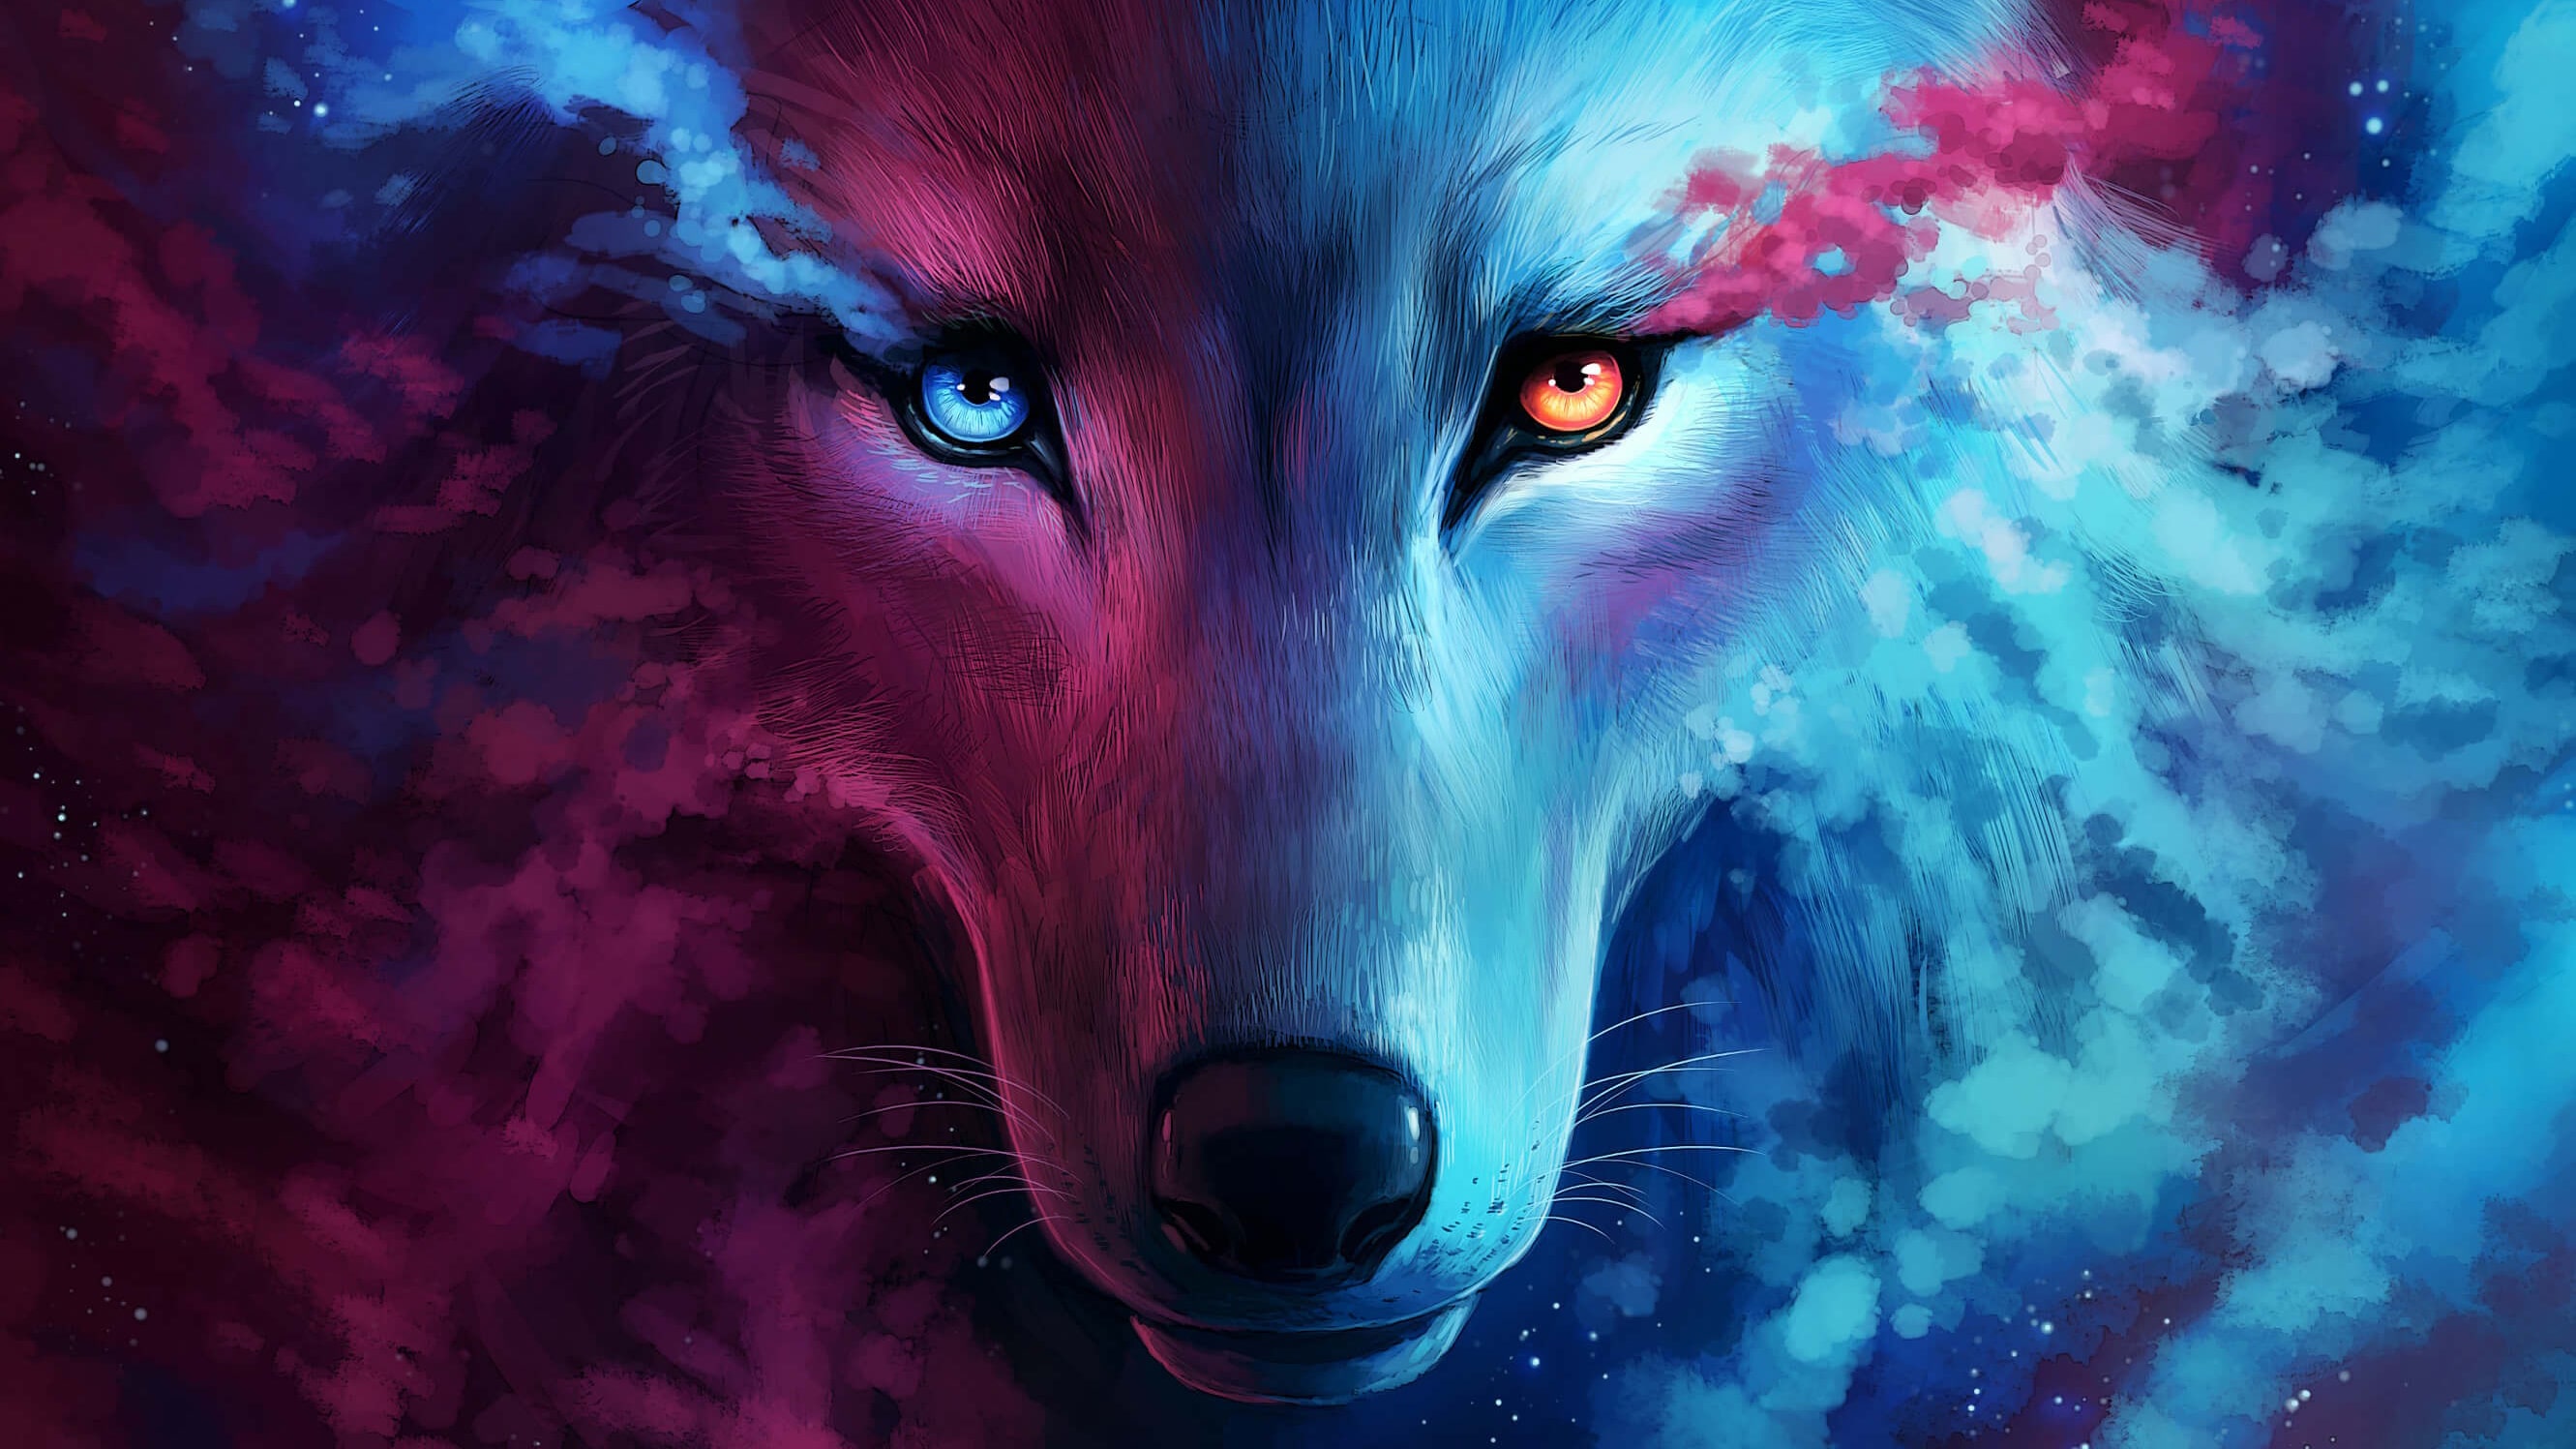 Galaxy Wolf Wallpaper - NawPic